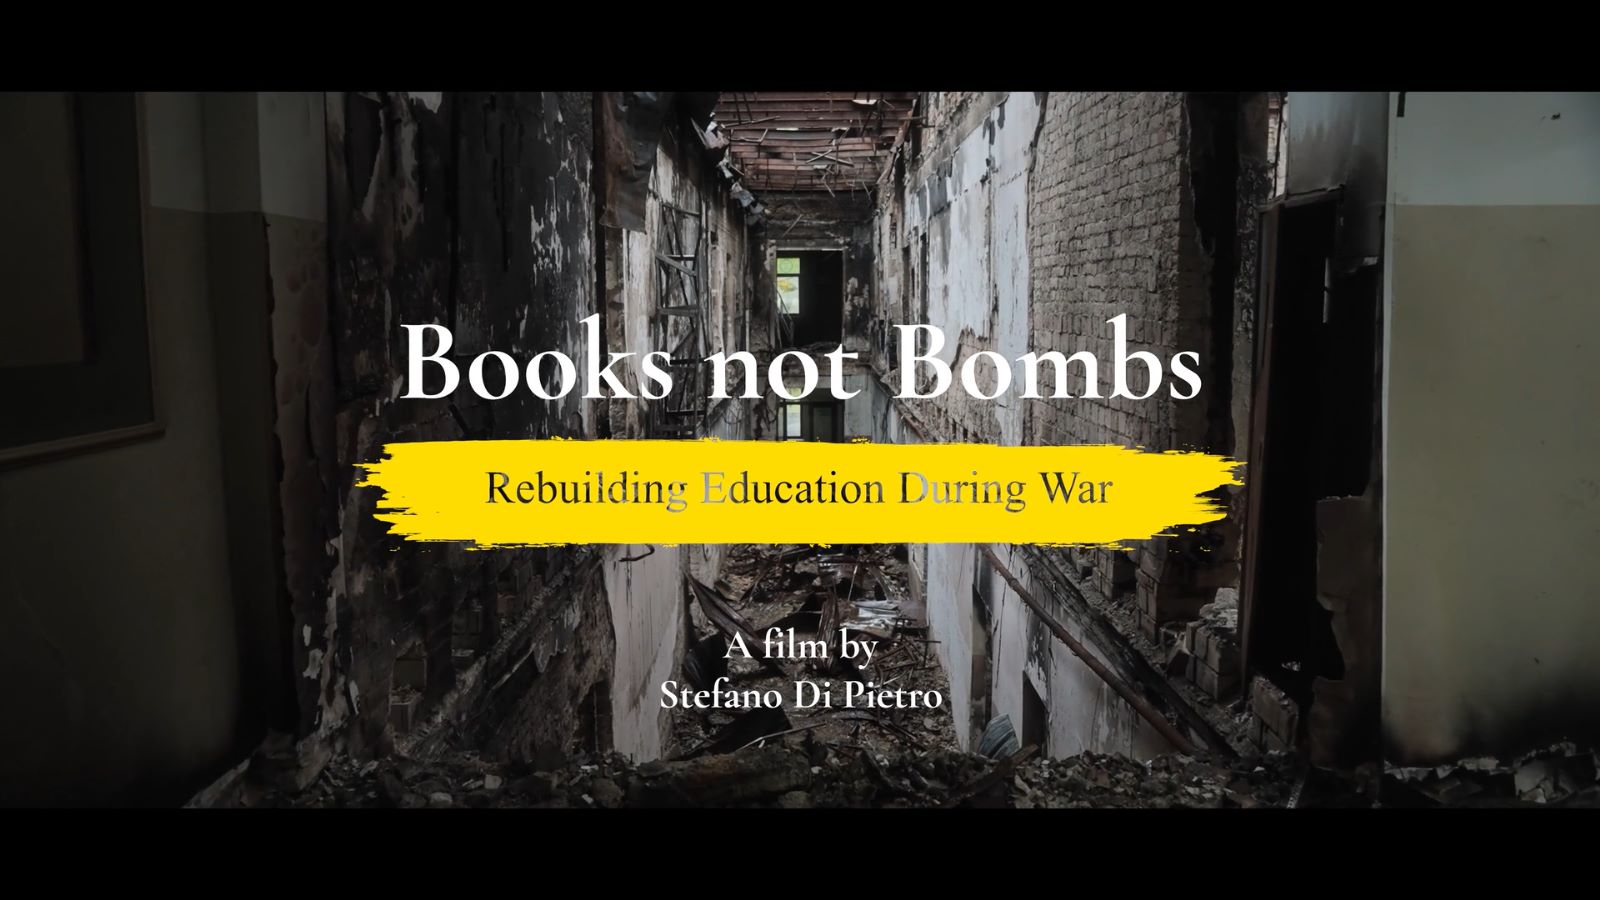 BOOKS NOT BOMBS